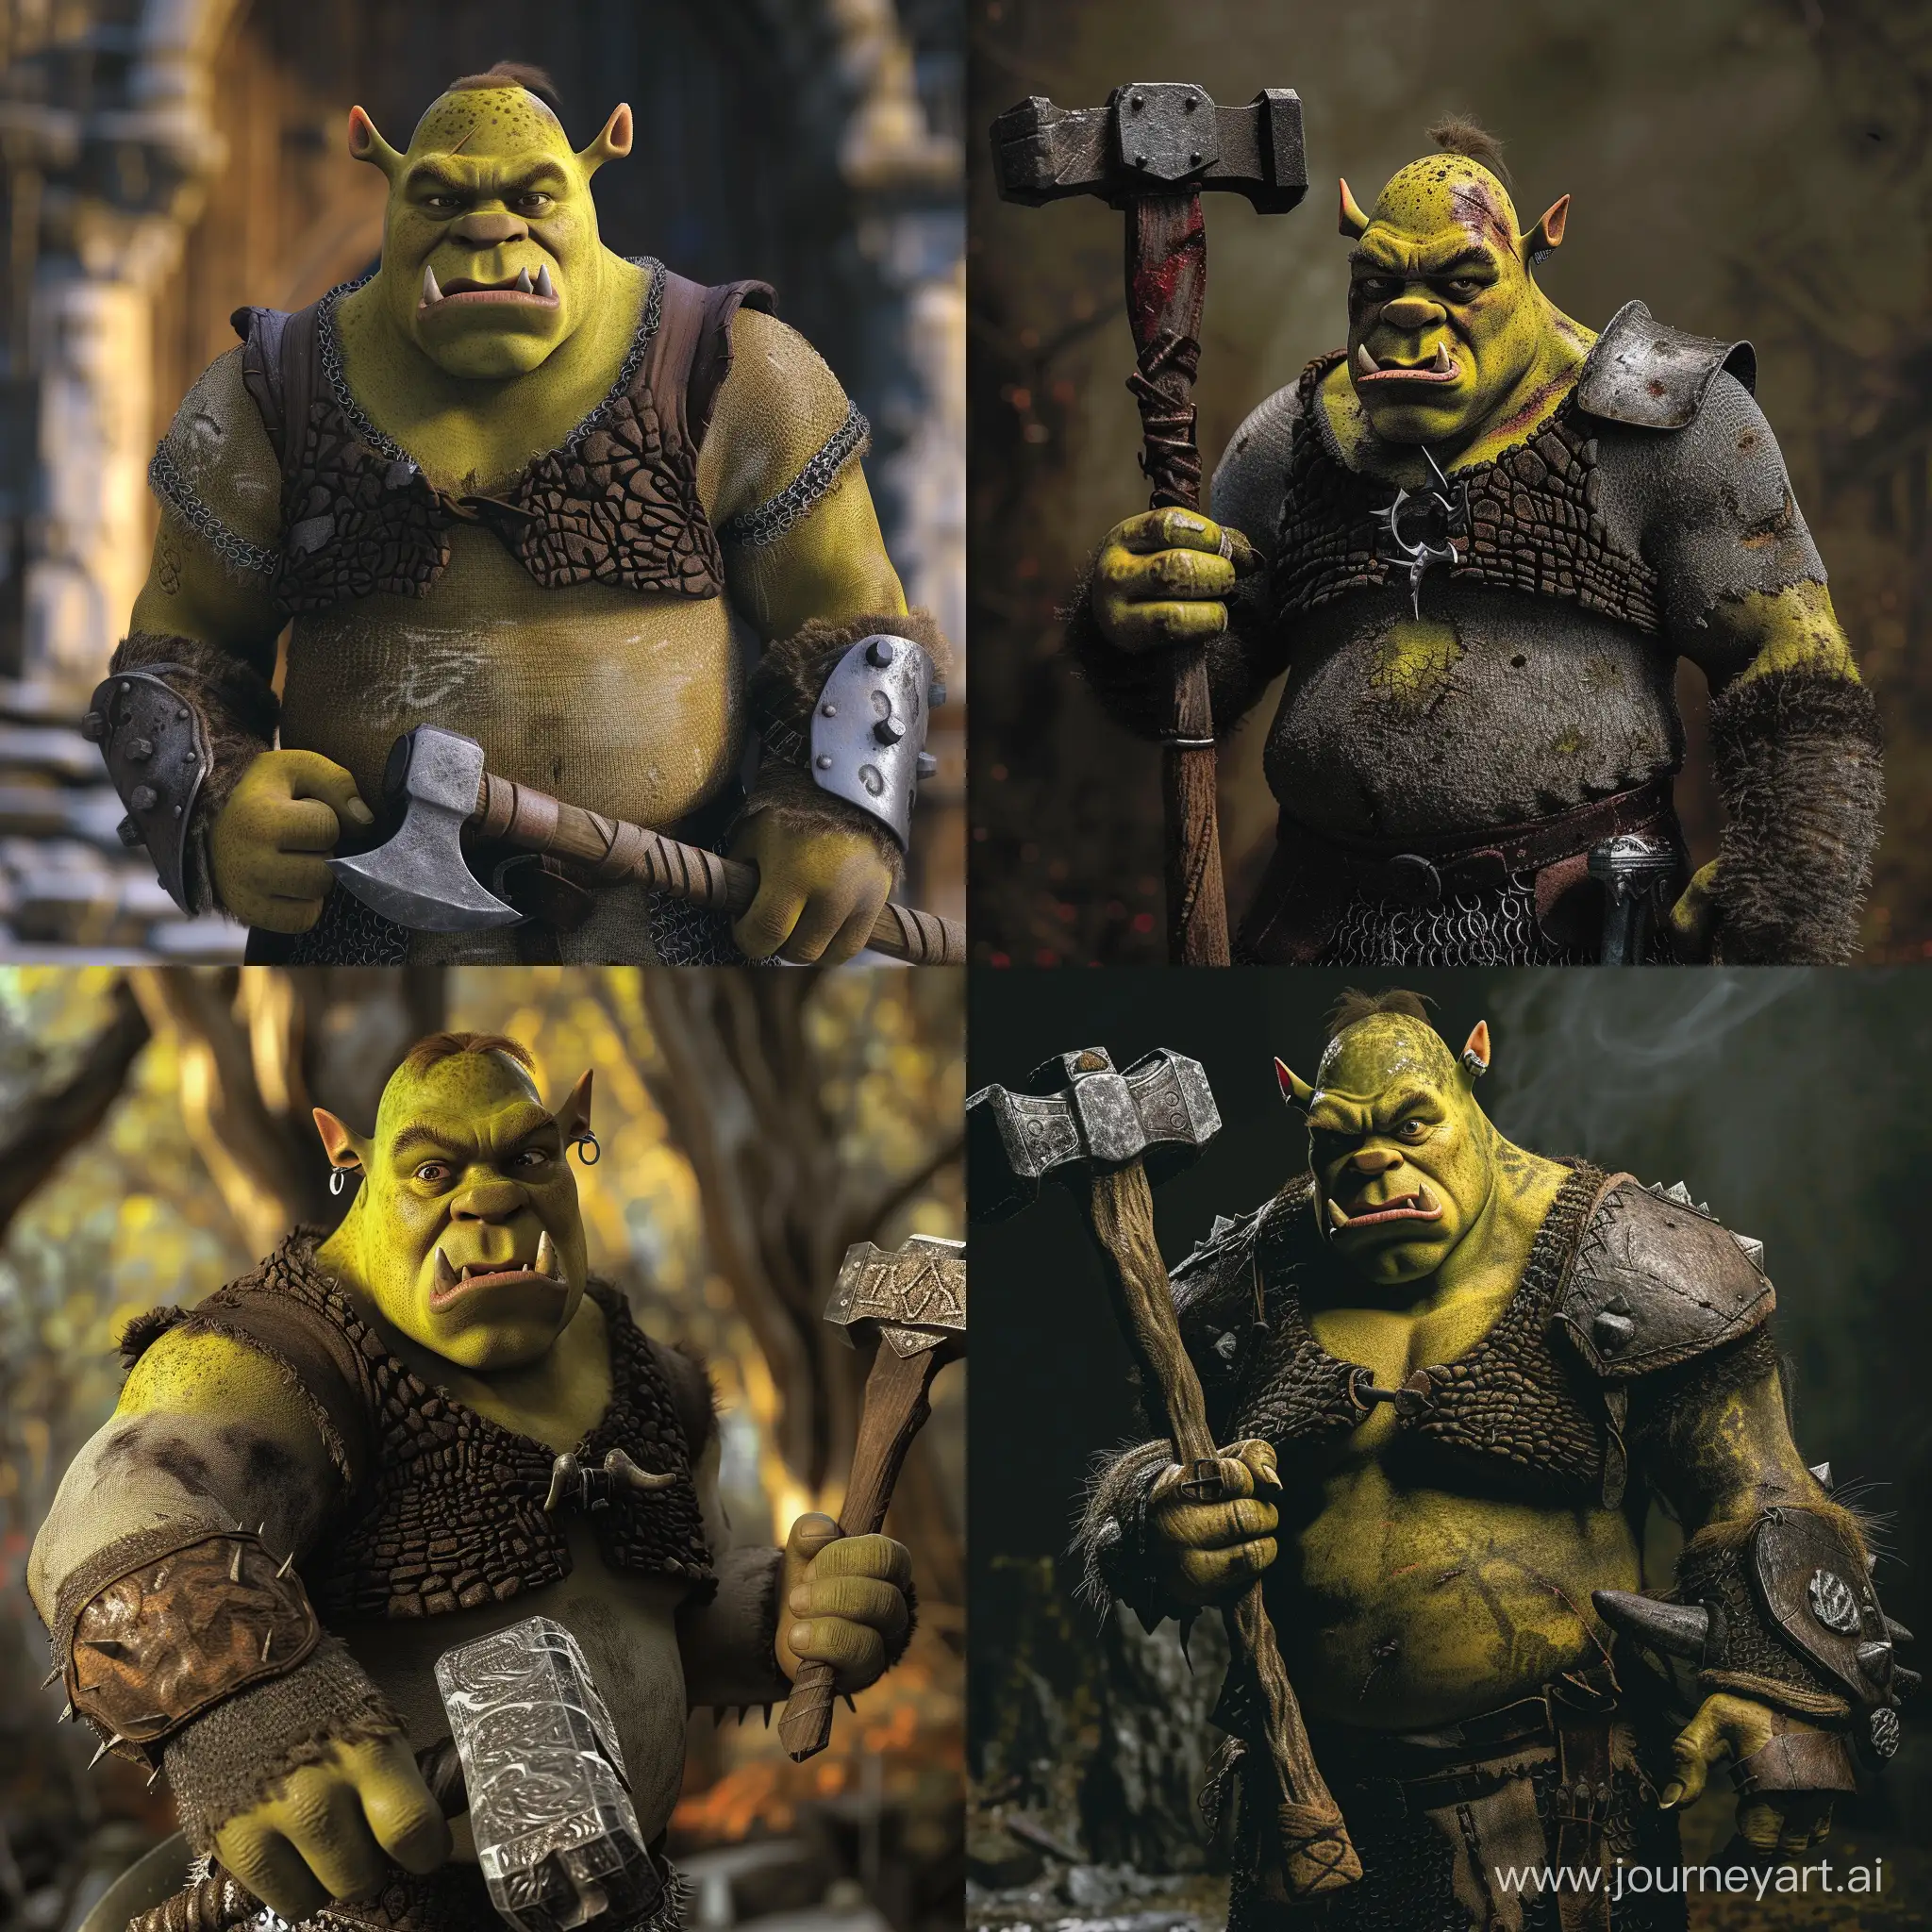 Shrek looking orc, holding a battle hammer